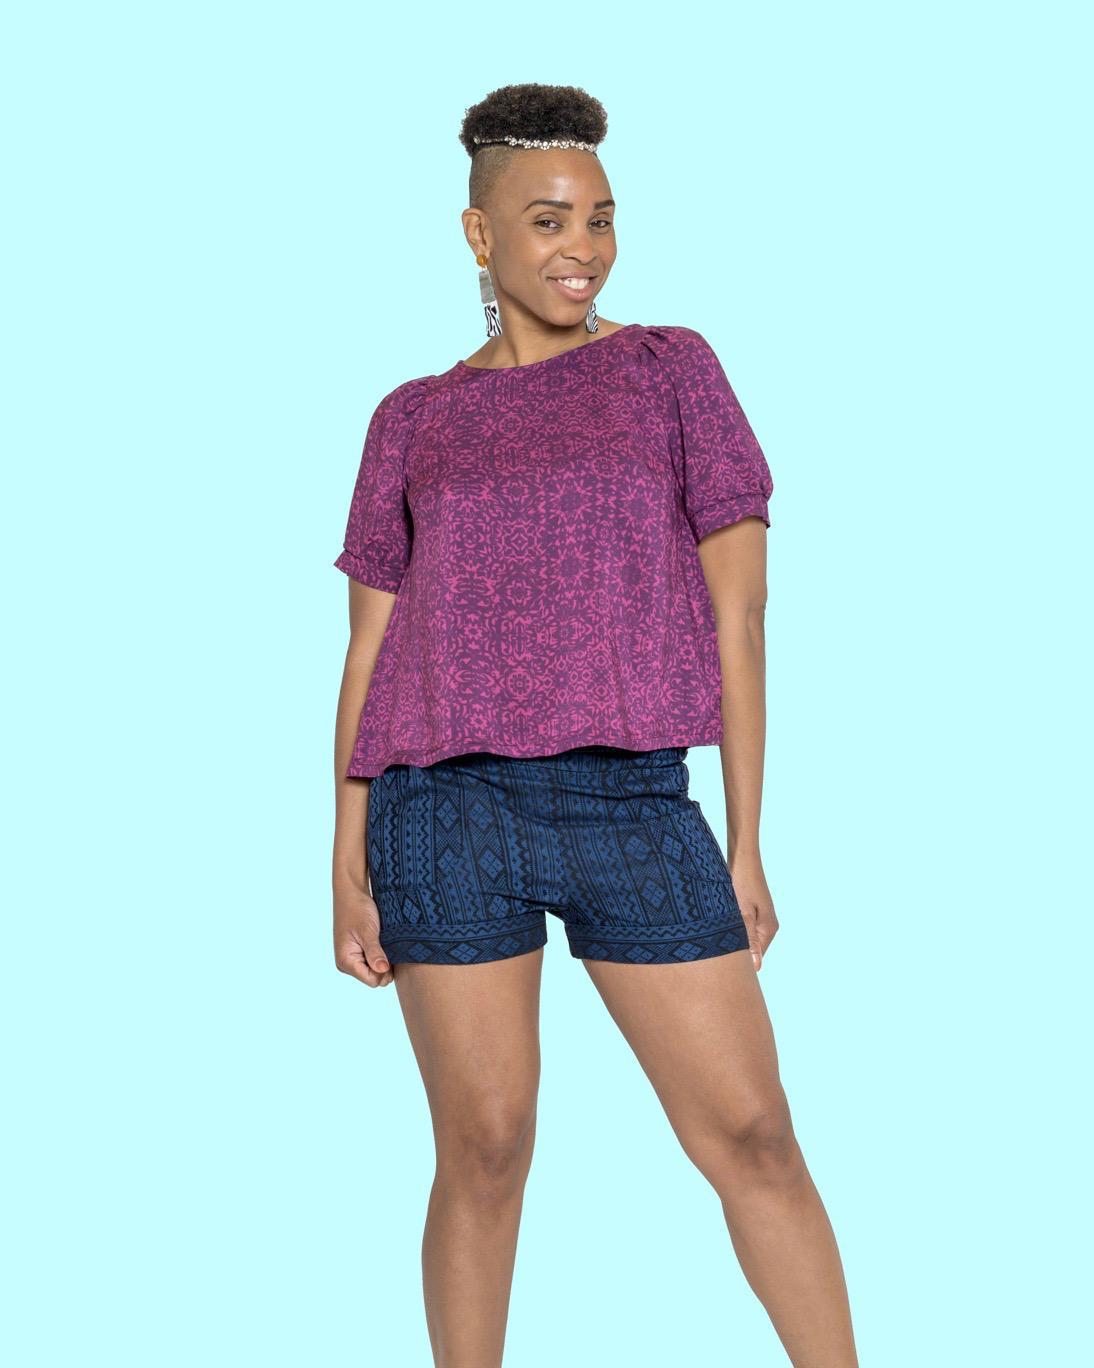 Squasht Short Shorts in Blue and Black Geo Print - SALE